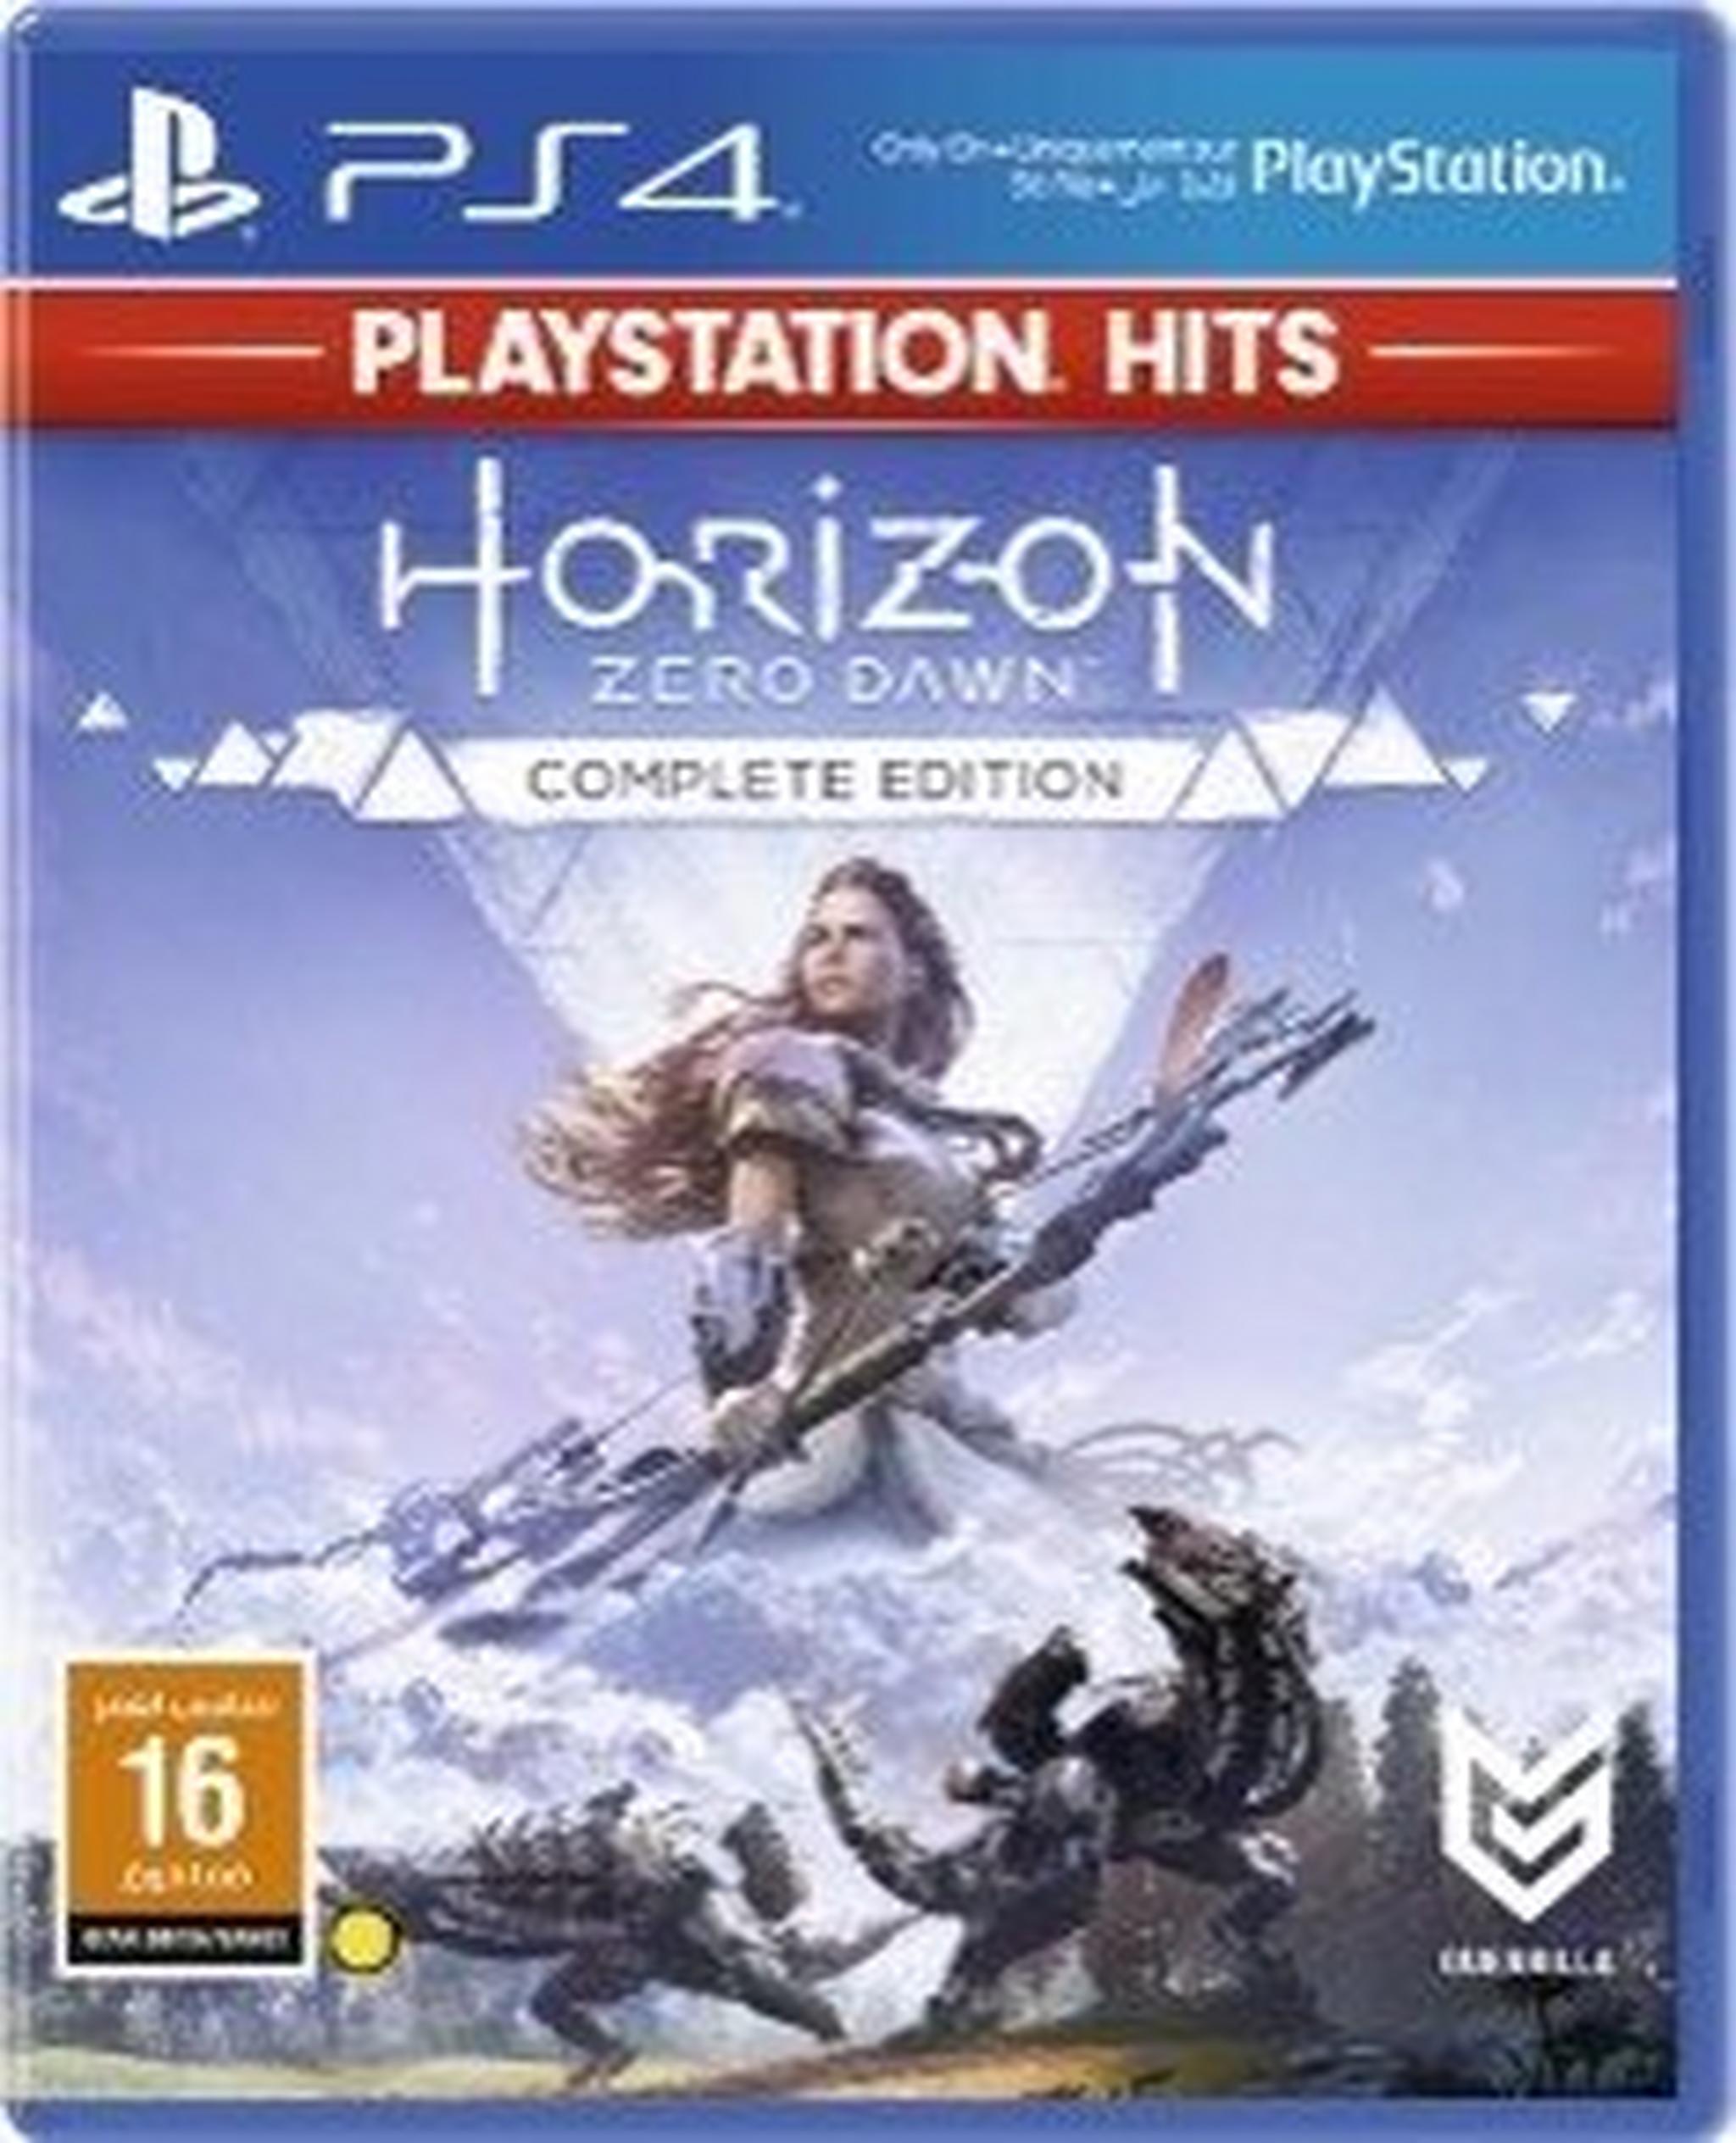 Sony PlayStation 4 Slim 1TB Console + Death Stranding & Horizon Zero Dawn Complete Edition Games